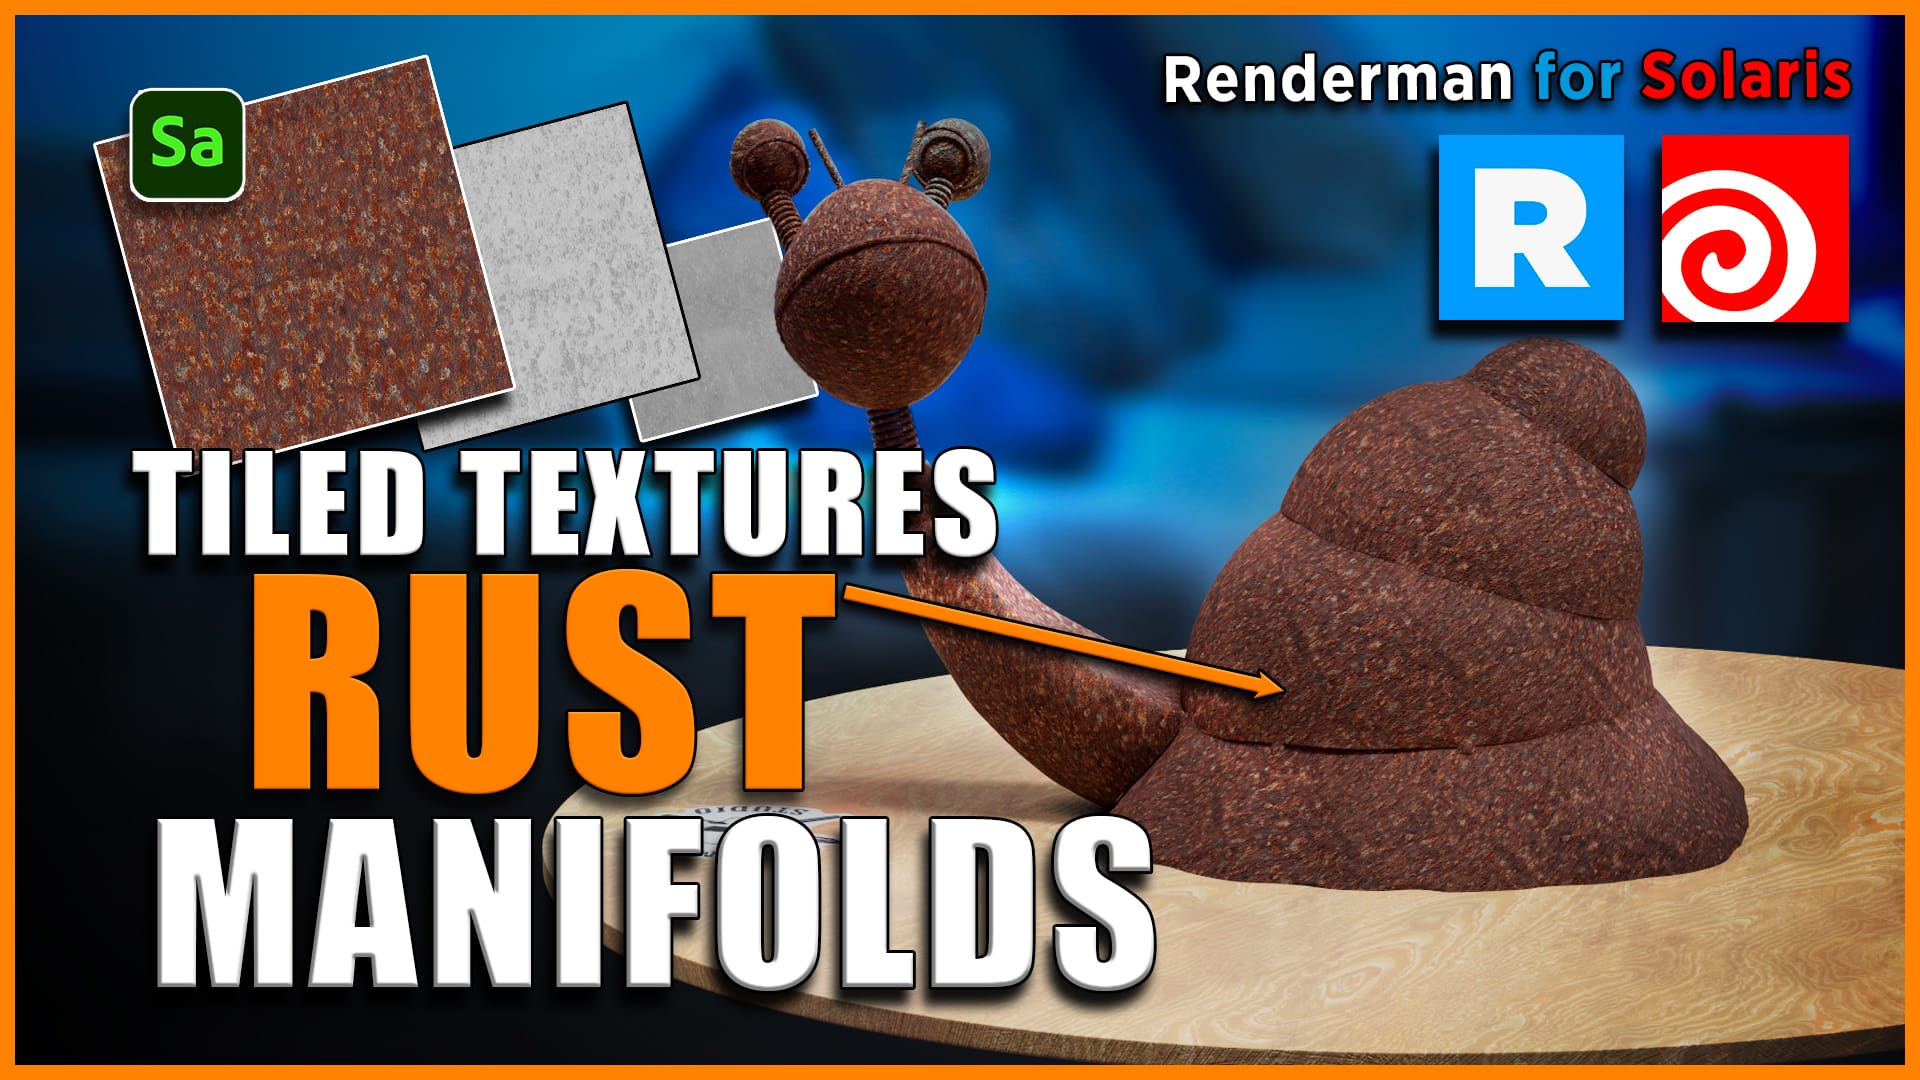 Renderman Tiled textures